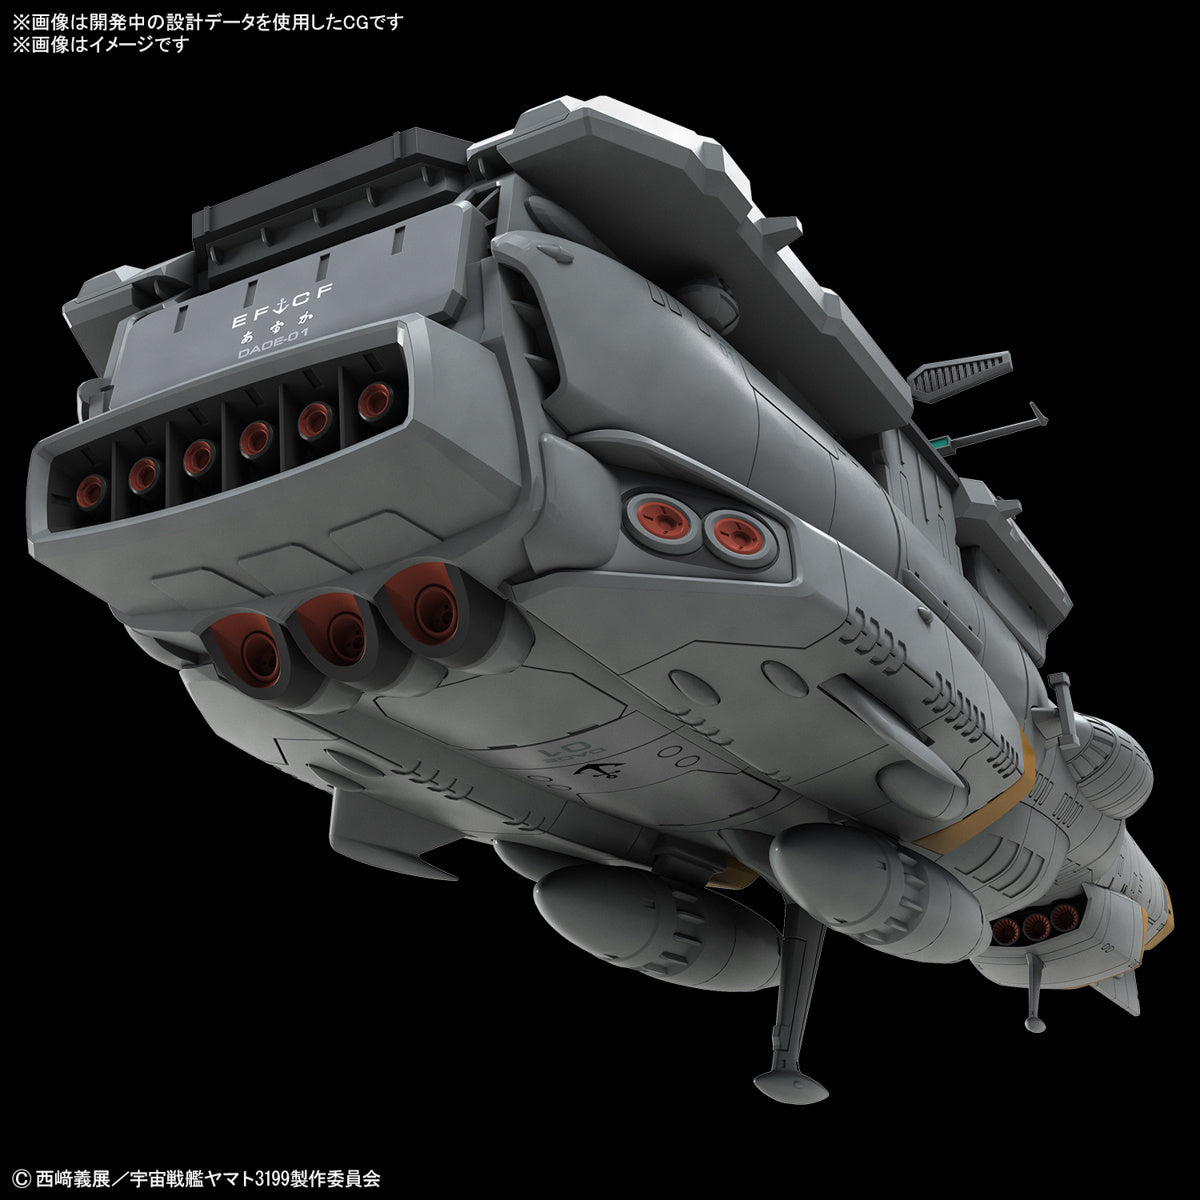 YAMATO - SPACE BATTLESHIP 1/1000 - EFCF ASUKA CLASS FAST COMBAT SUPPORT TENDER / AMPHIBIOUS ASSAULT SHIP DX **PRE-ORDER**